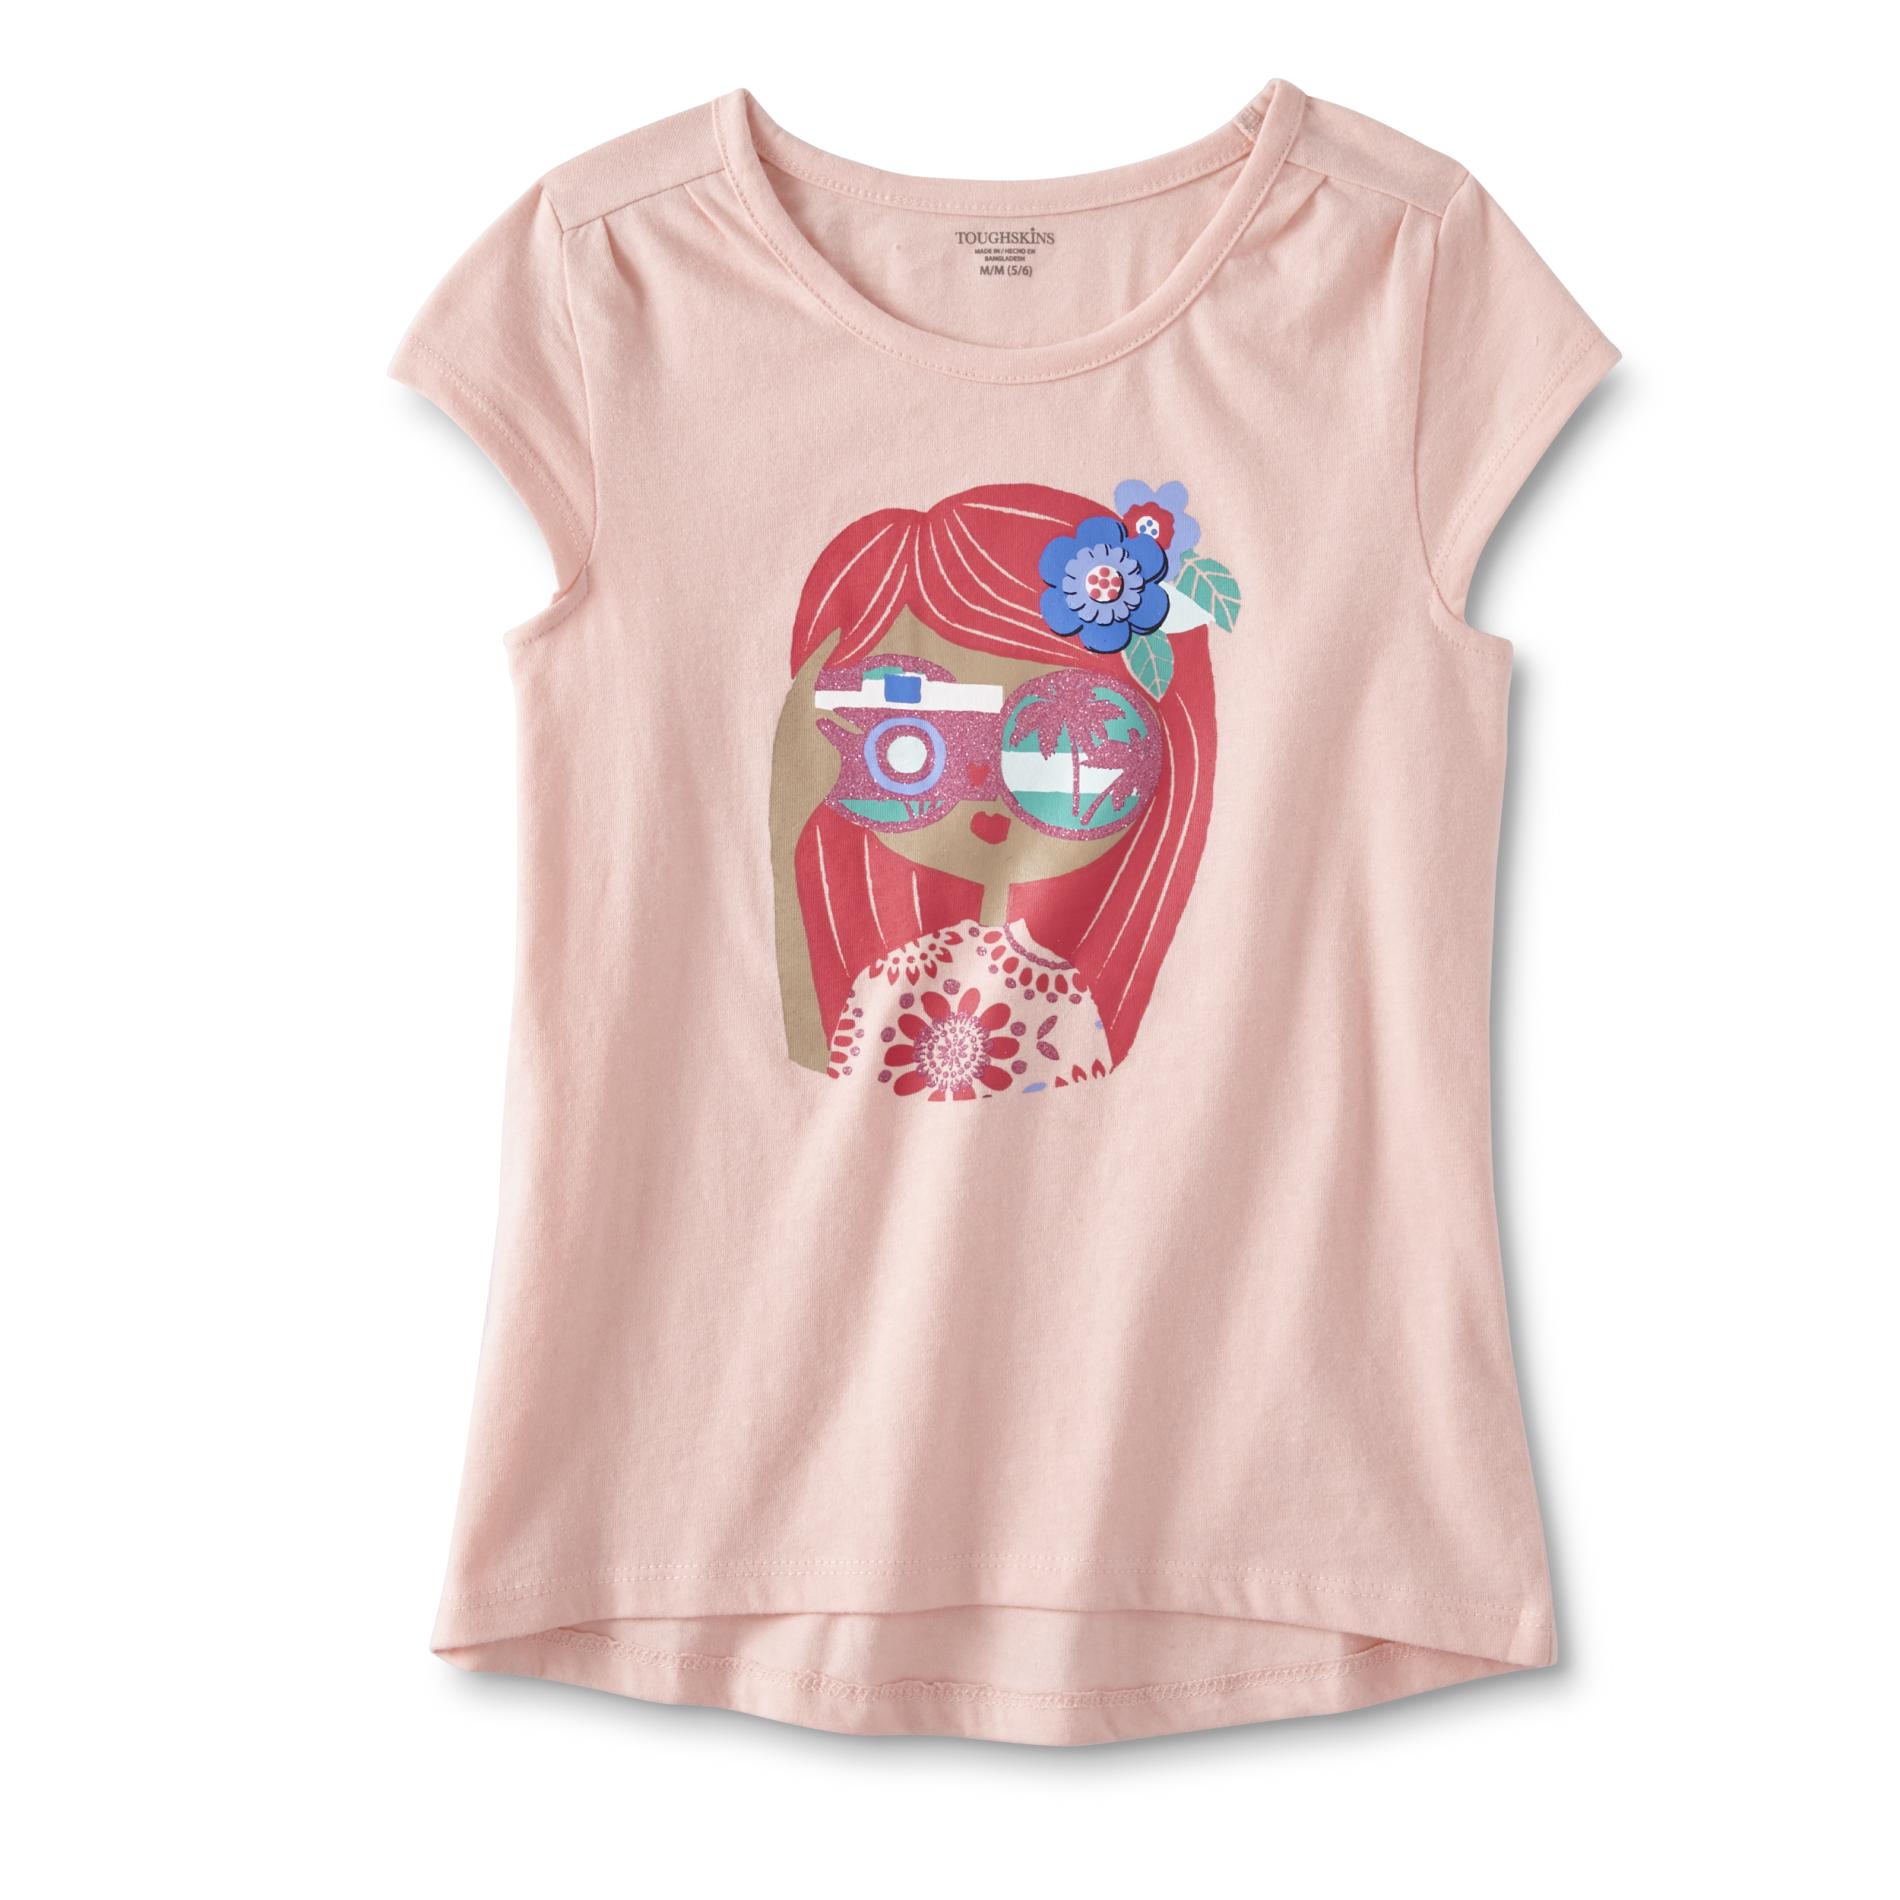 Toughskins Toddler Girls' Cap Sleeve Graphic T-Shirt - Girl & Camera